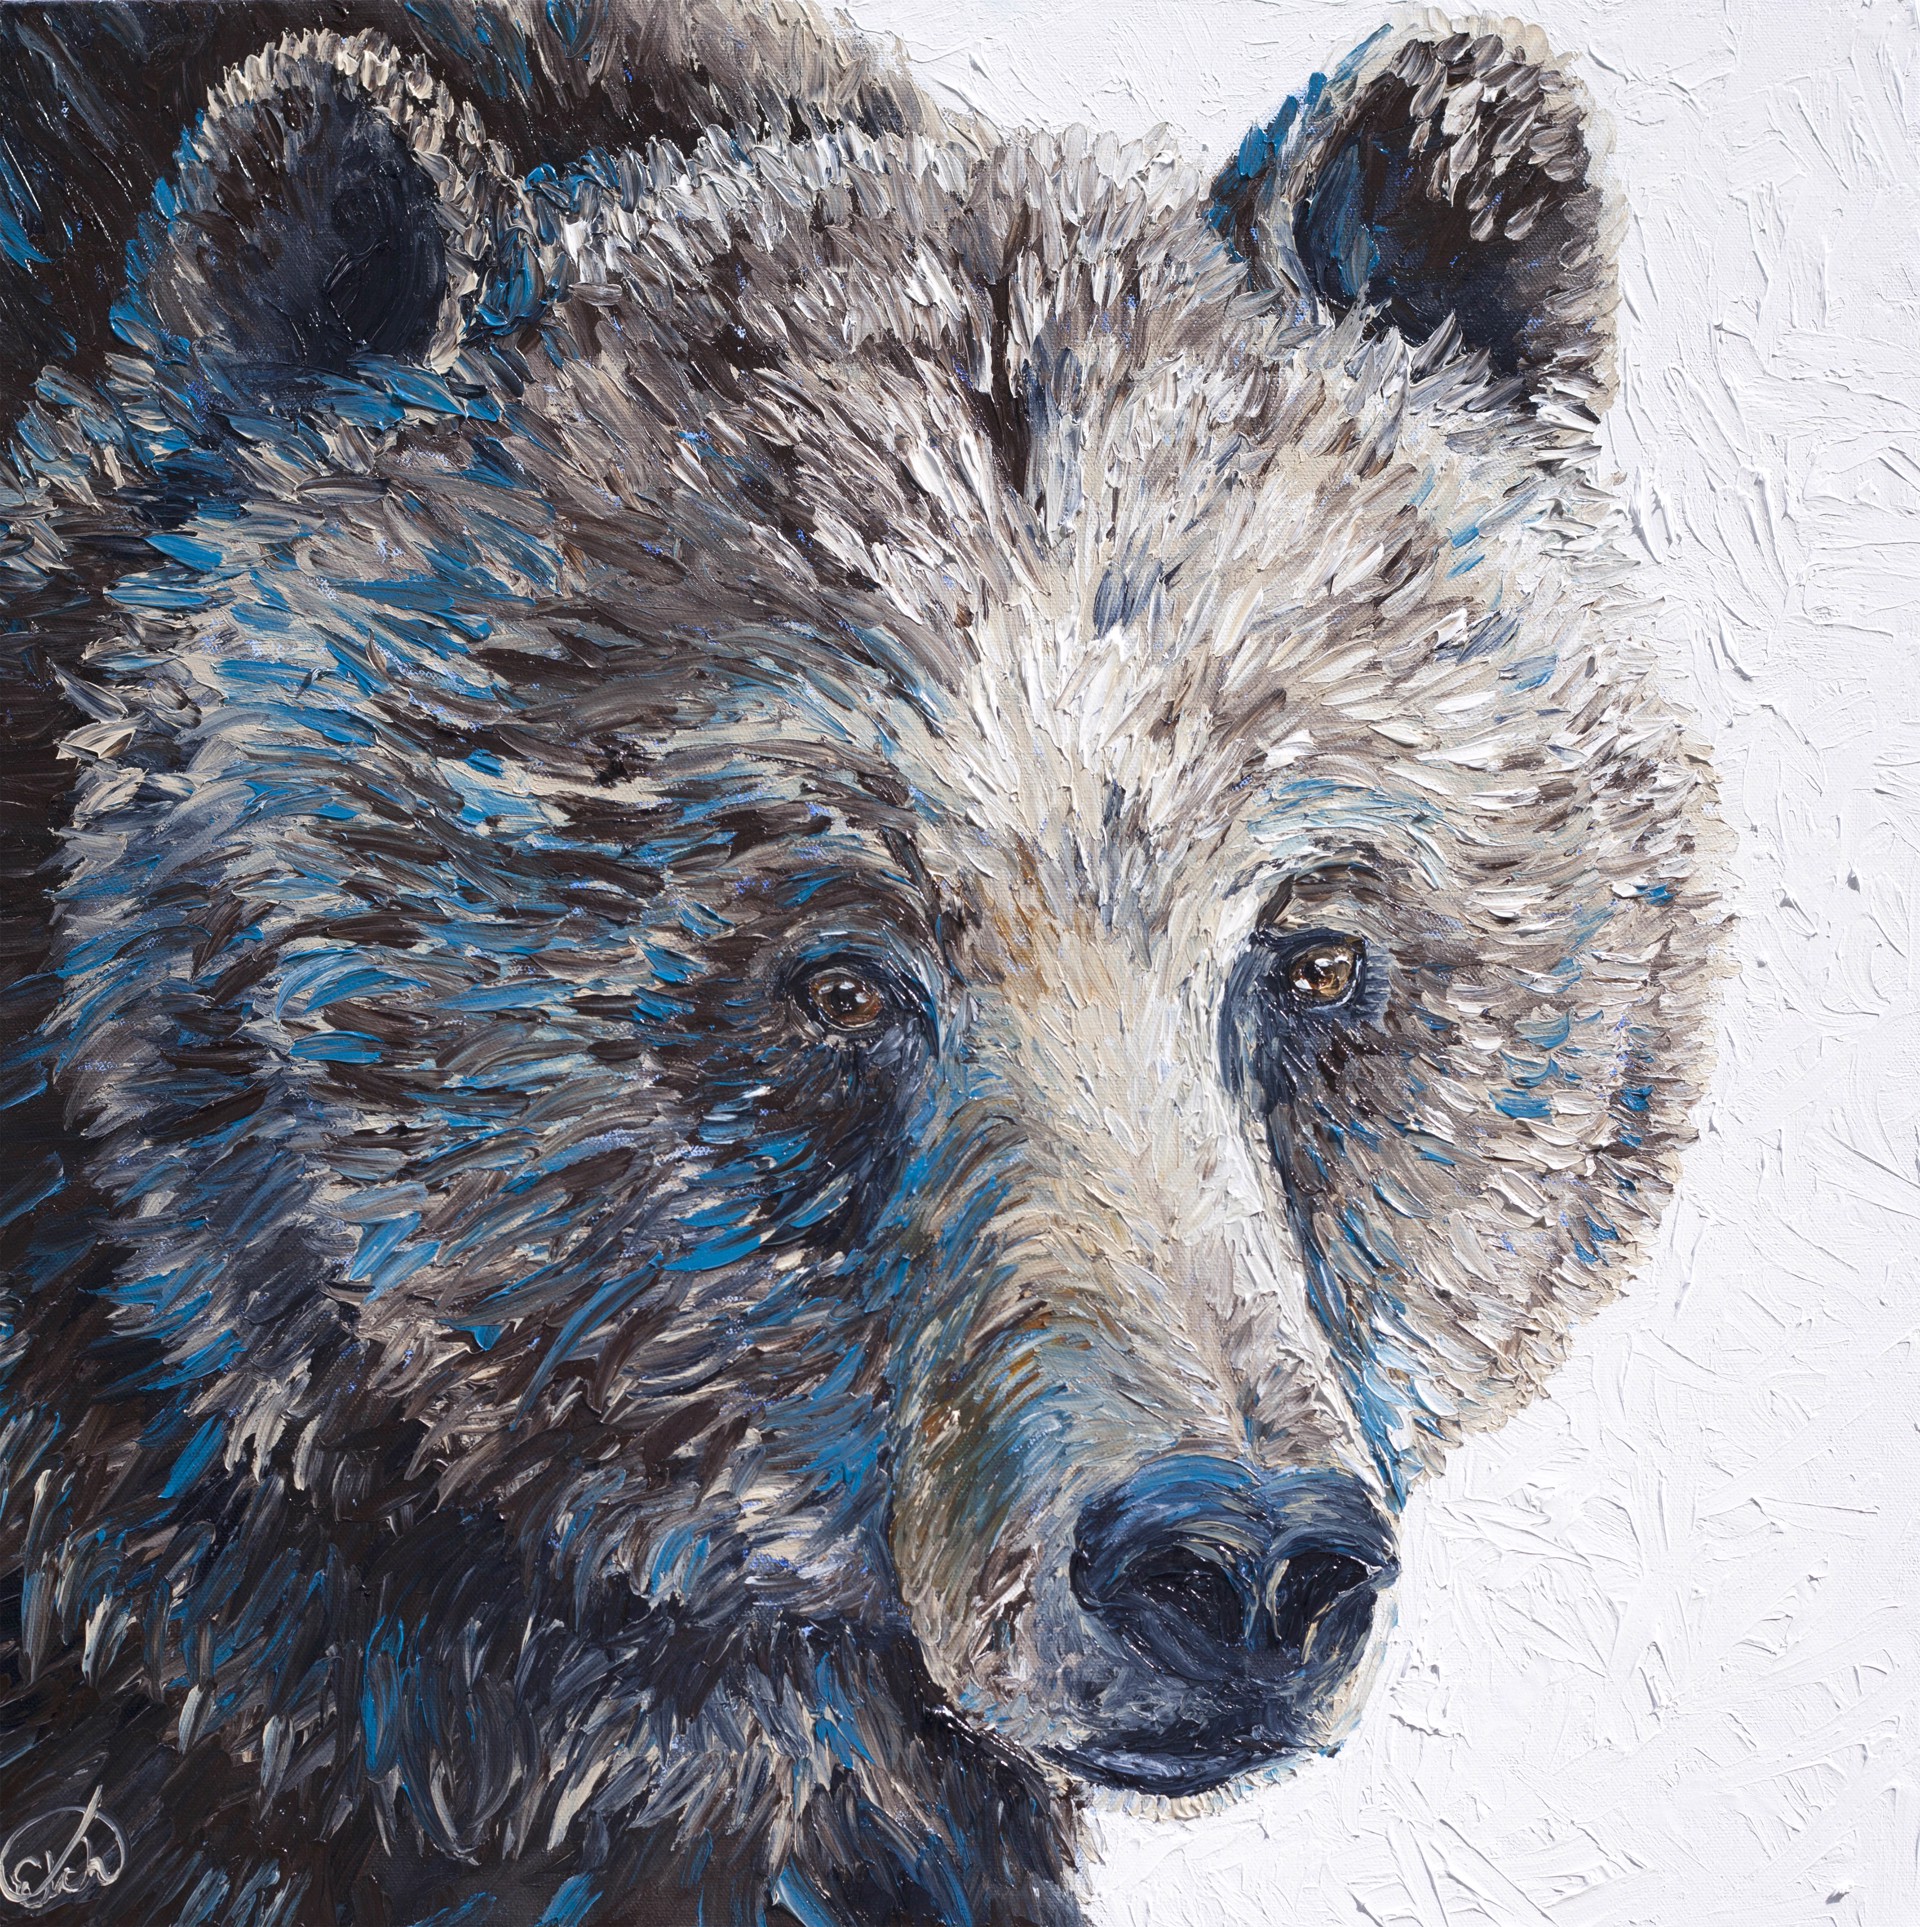 Portrait of a Grizzly Bear by Elizabeth Mordensky